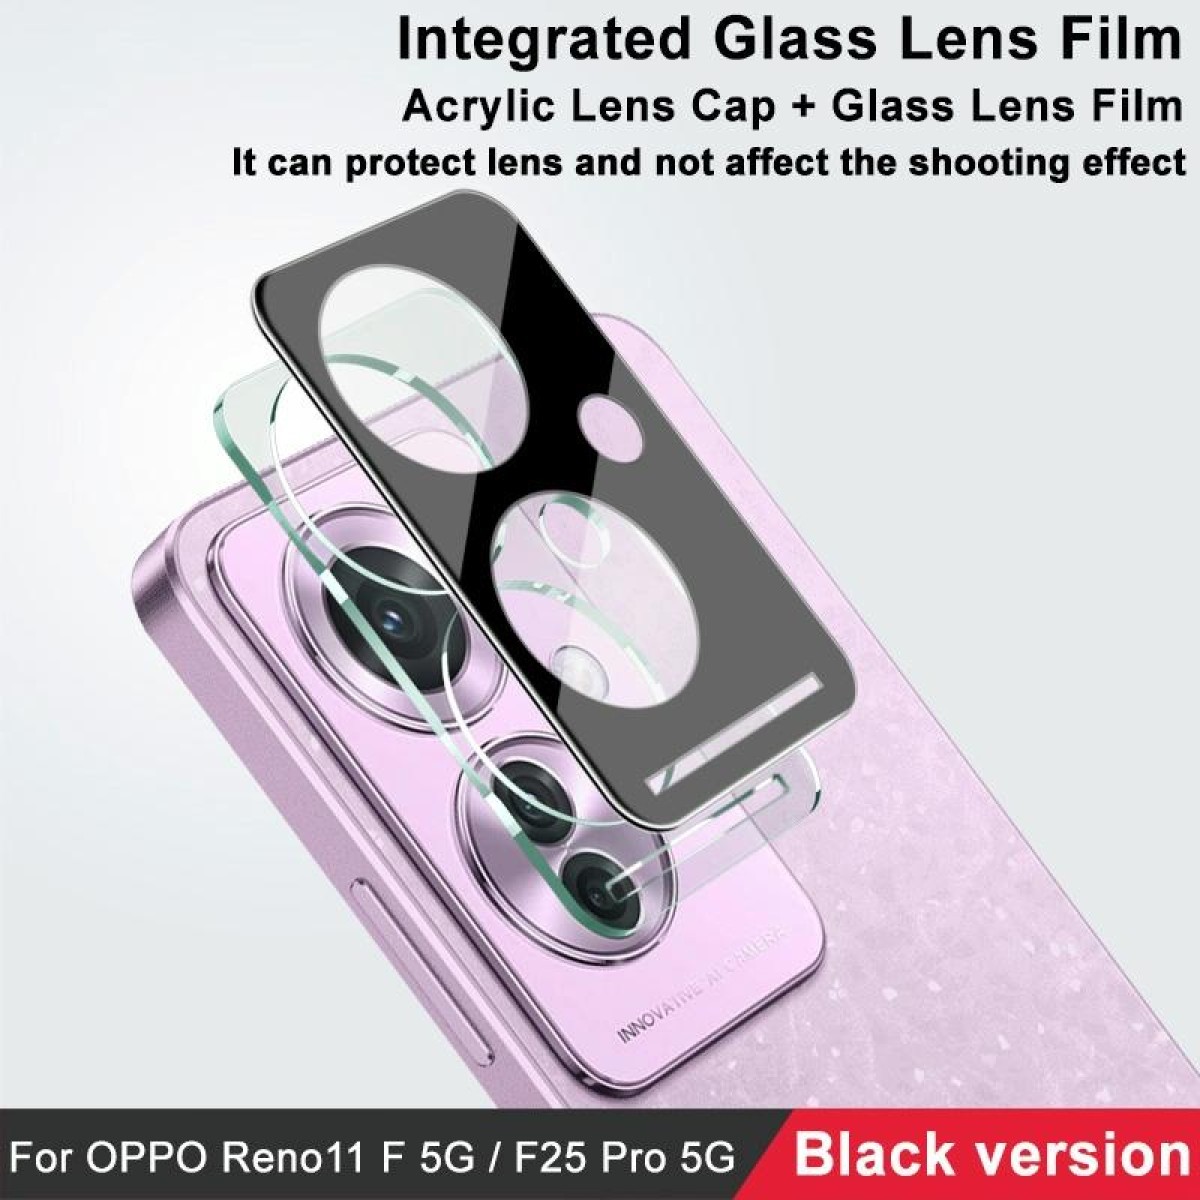 For OPPO Reno11 F 5G / F25 Pro 5G imak High Definition Integrated Glass Lens Film Black Version